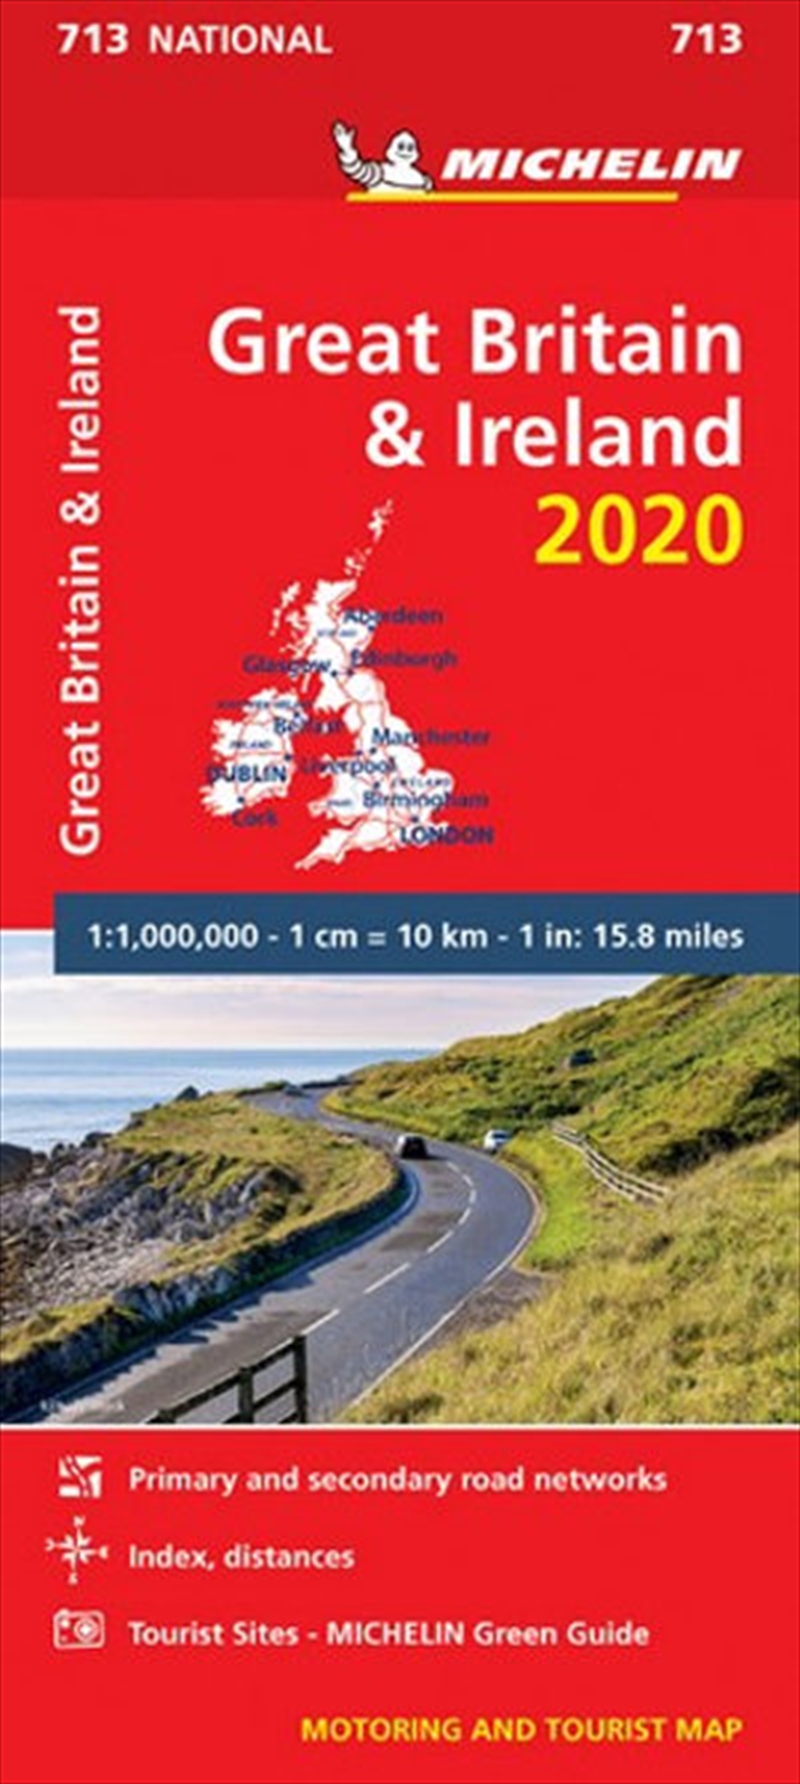 Great Britain & Ireland 2020 Michelin National Road Map 713 | Sheet Map